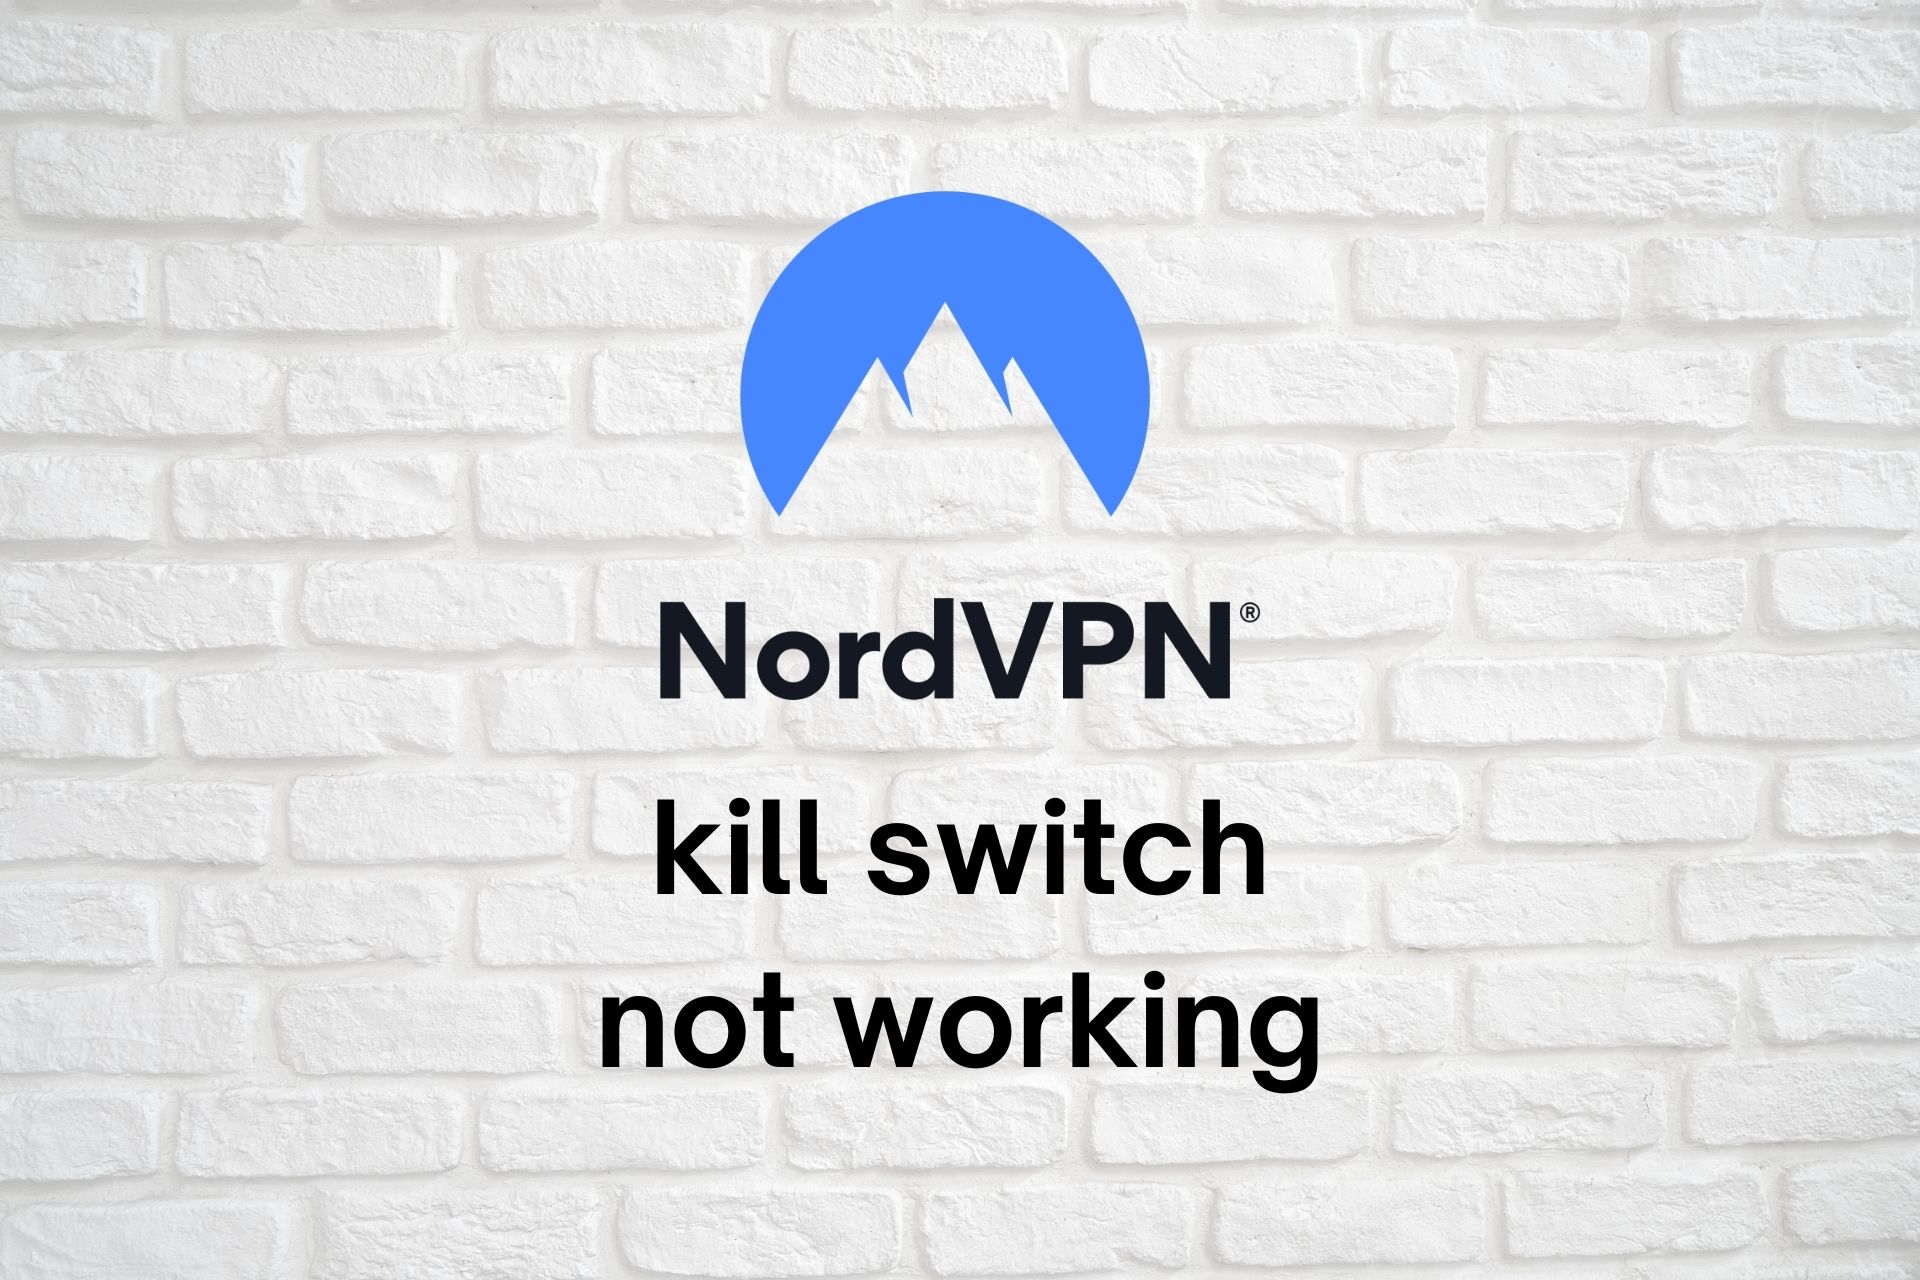 NordVPN kill switch not working